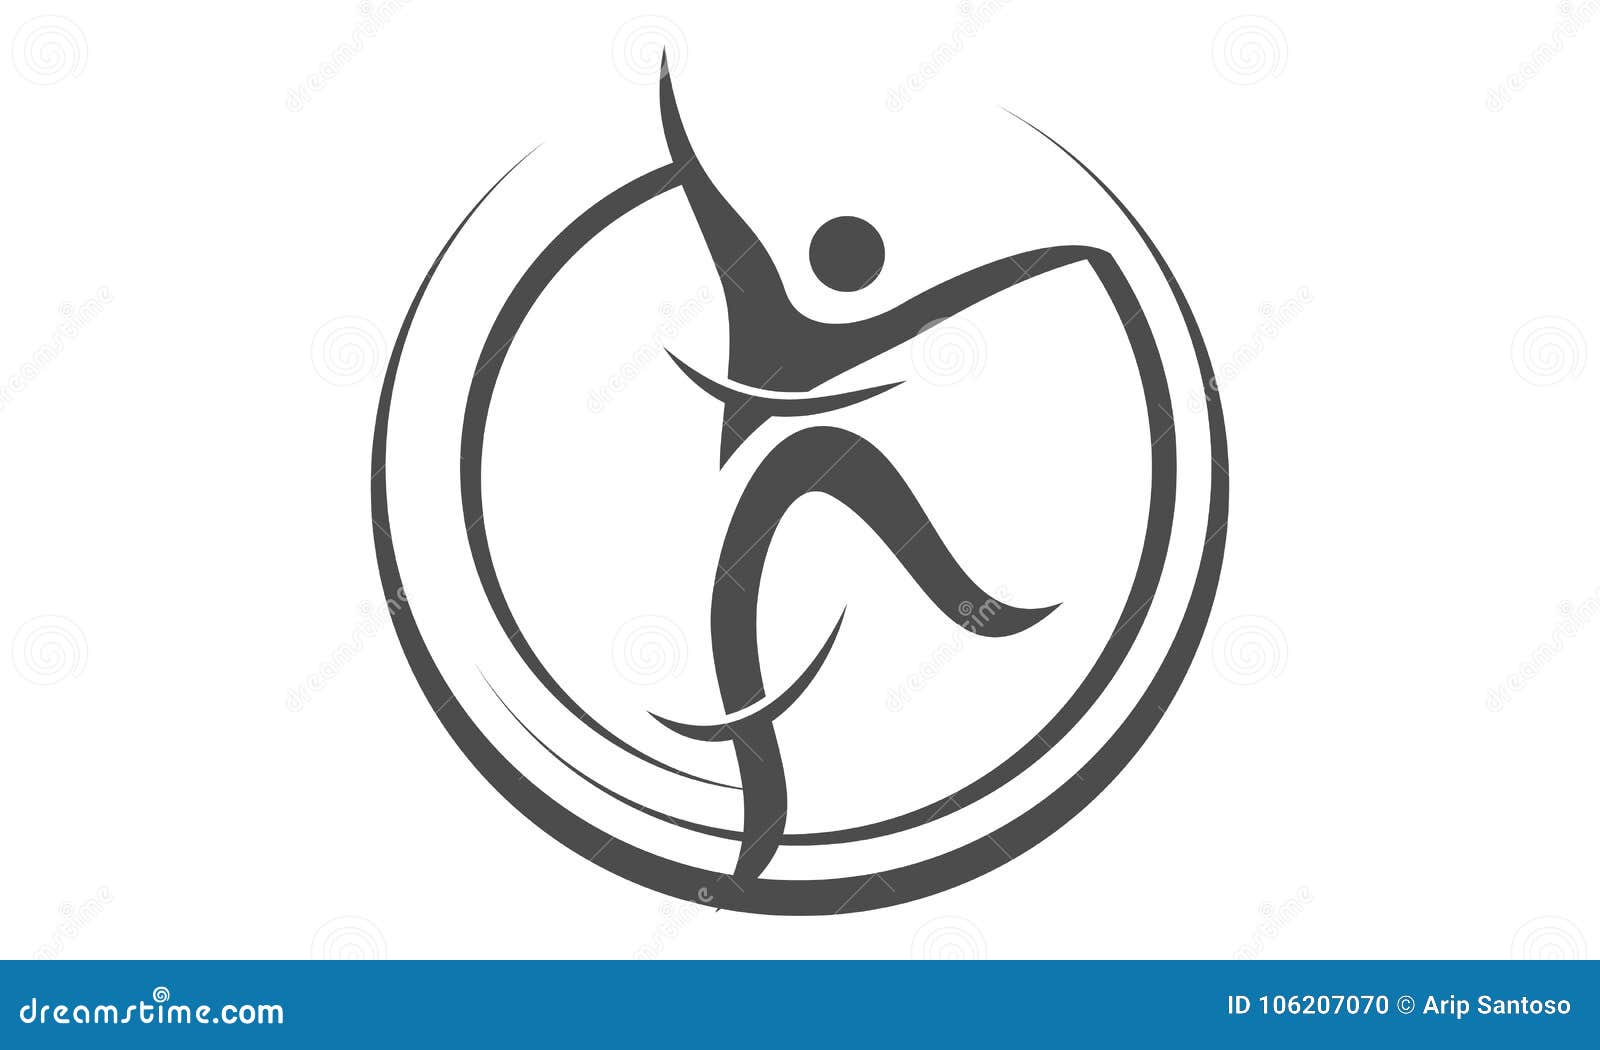 dance movement logo  template